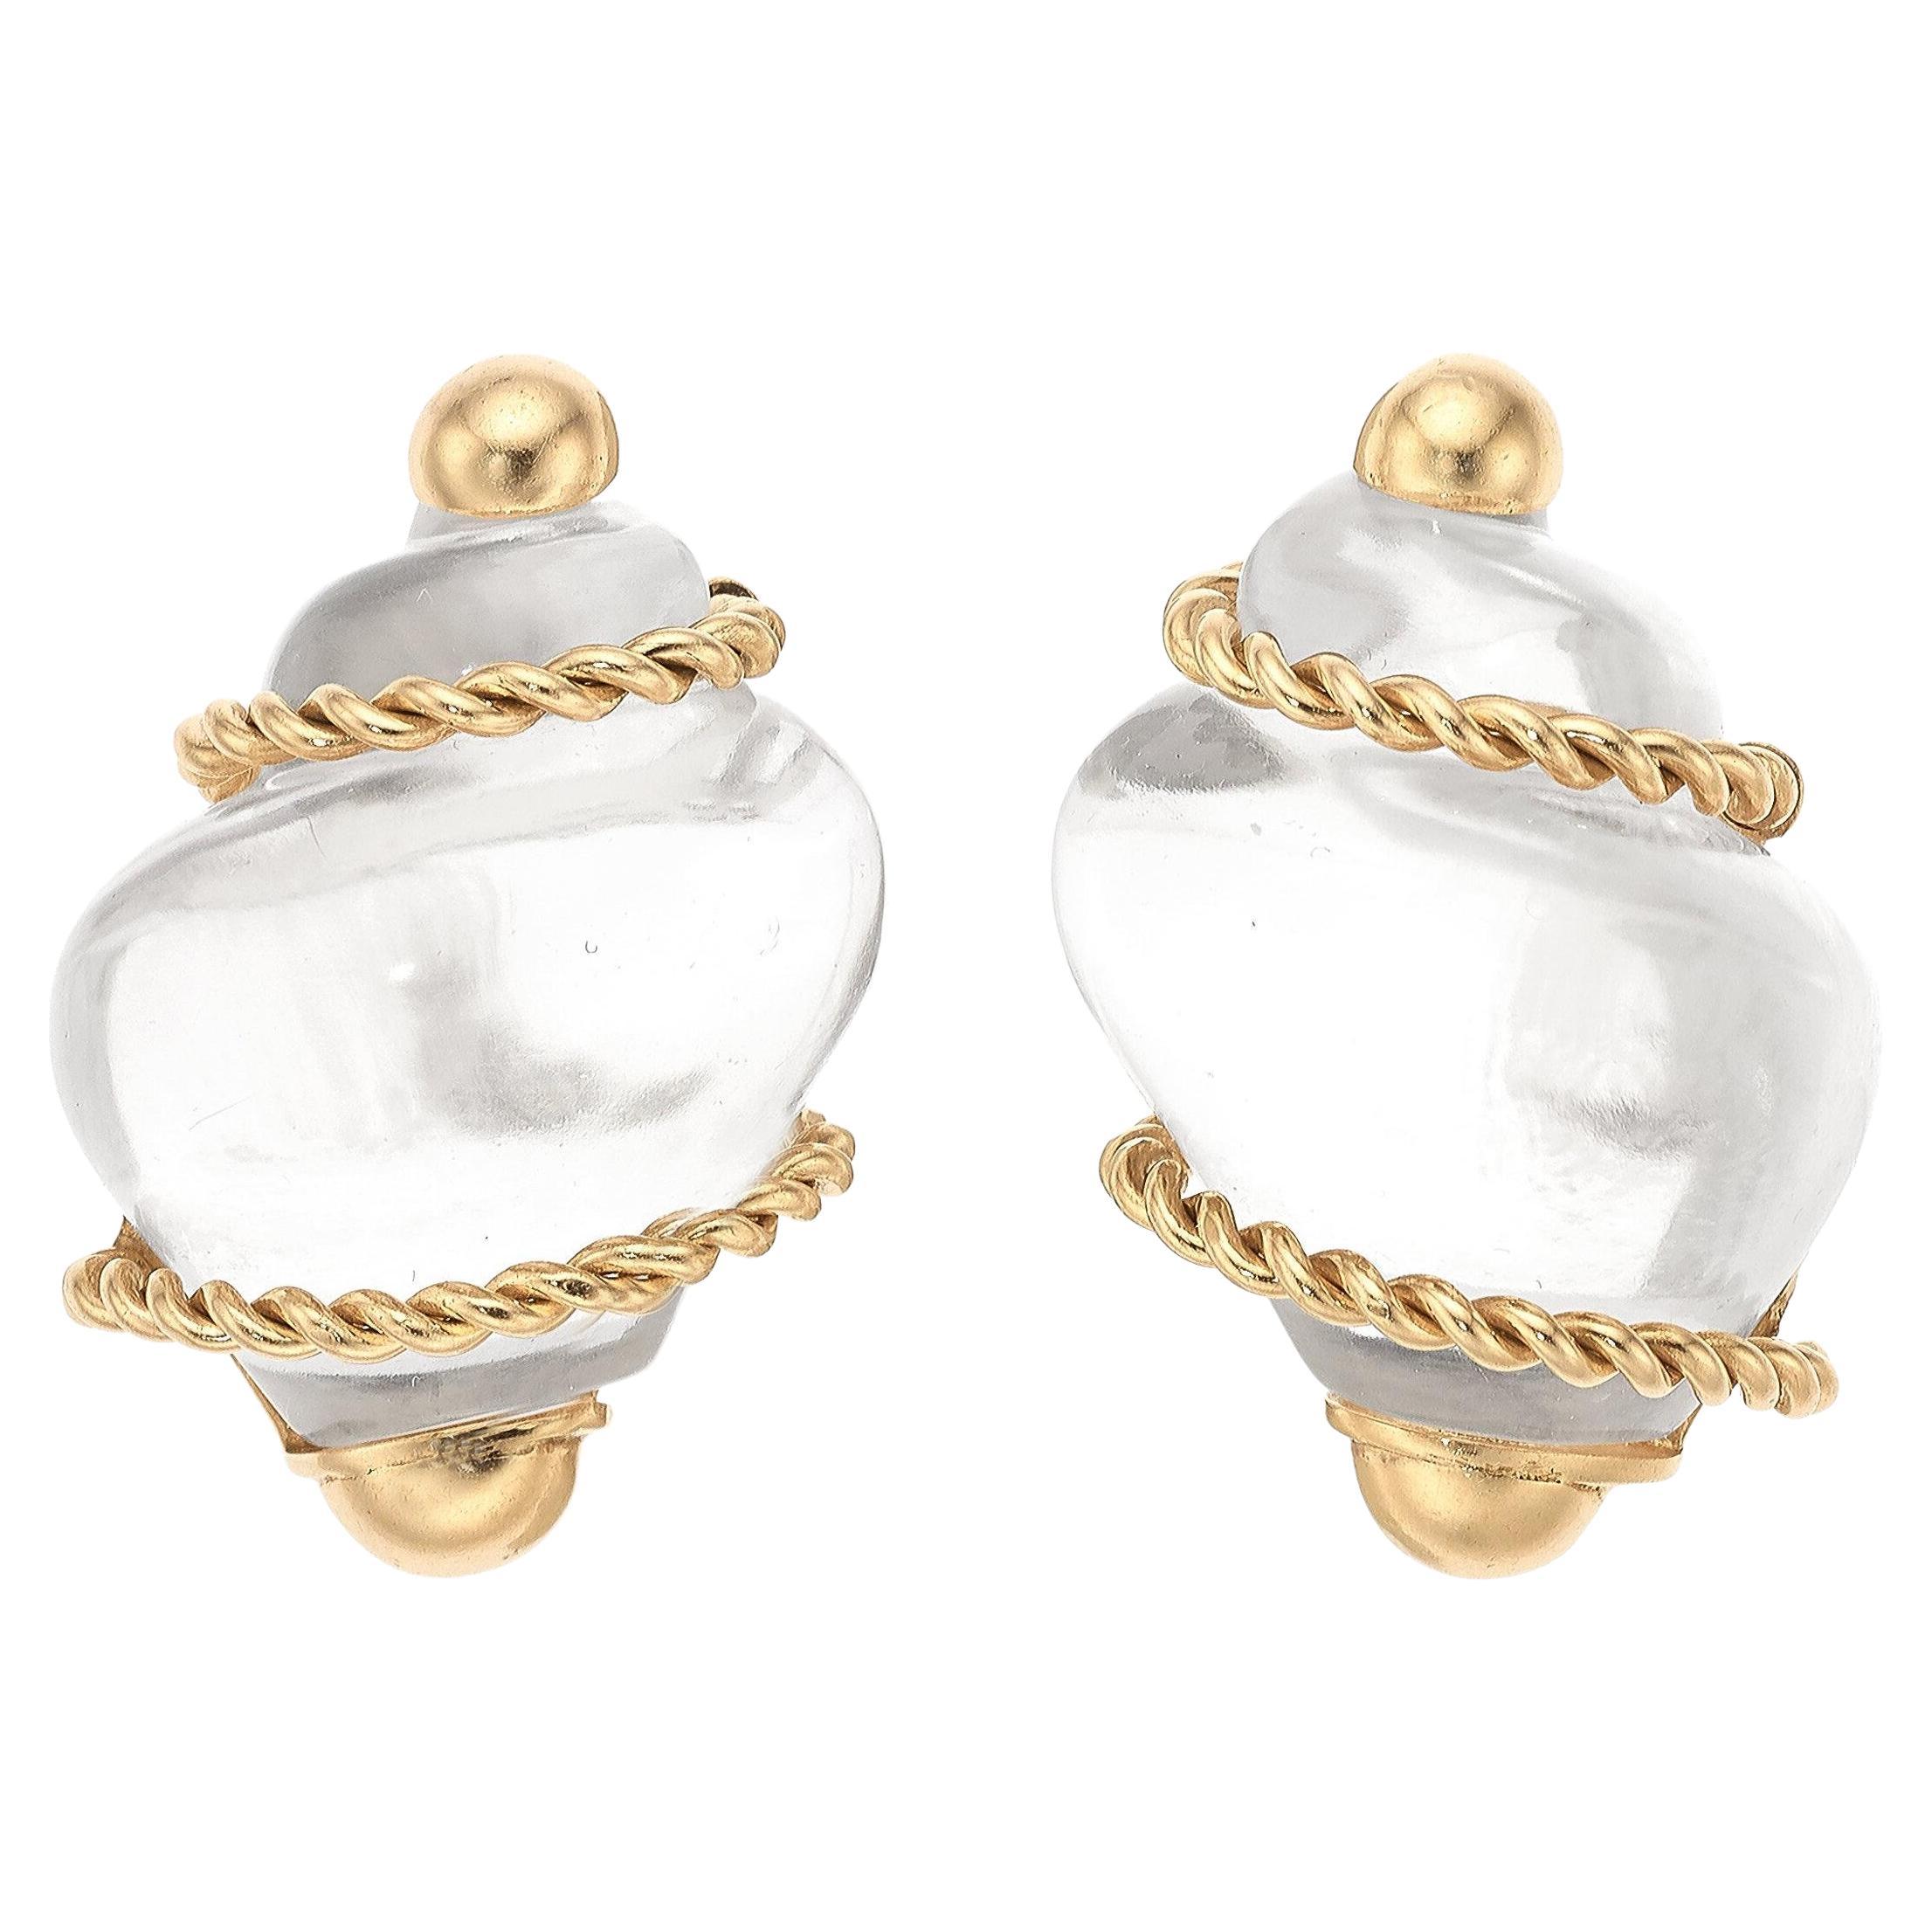 Seaman Schepps Gold Rock Crystal Shell Earrings